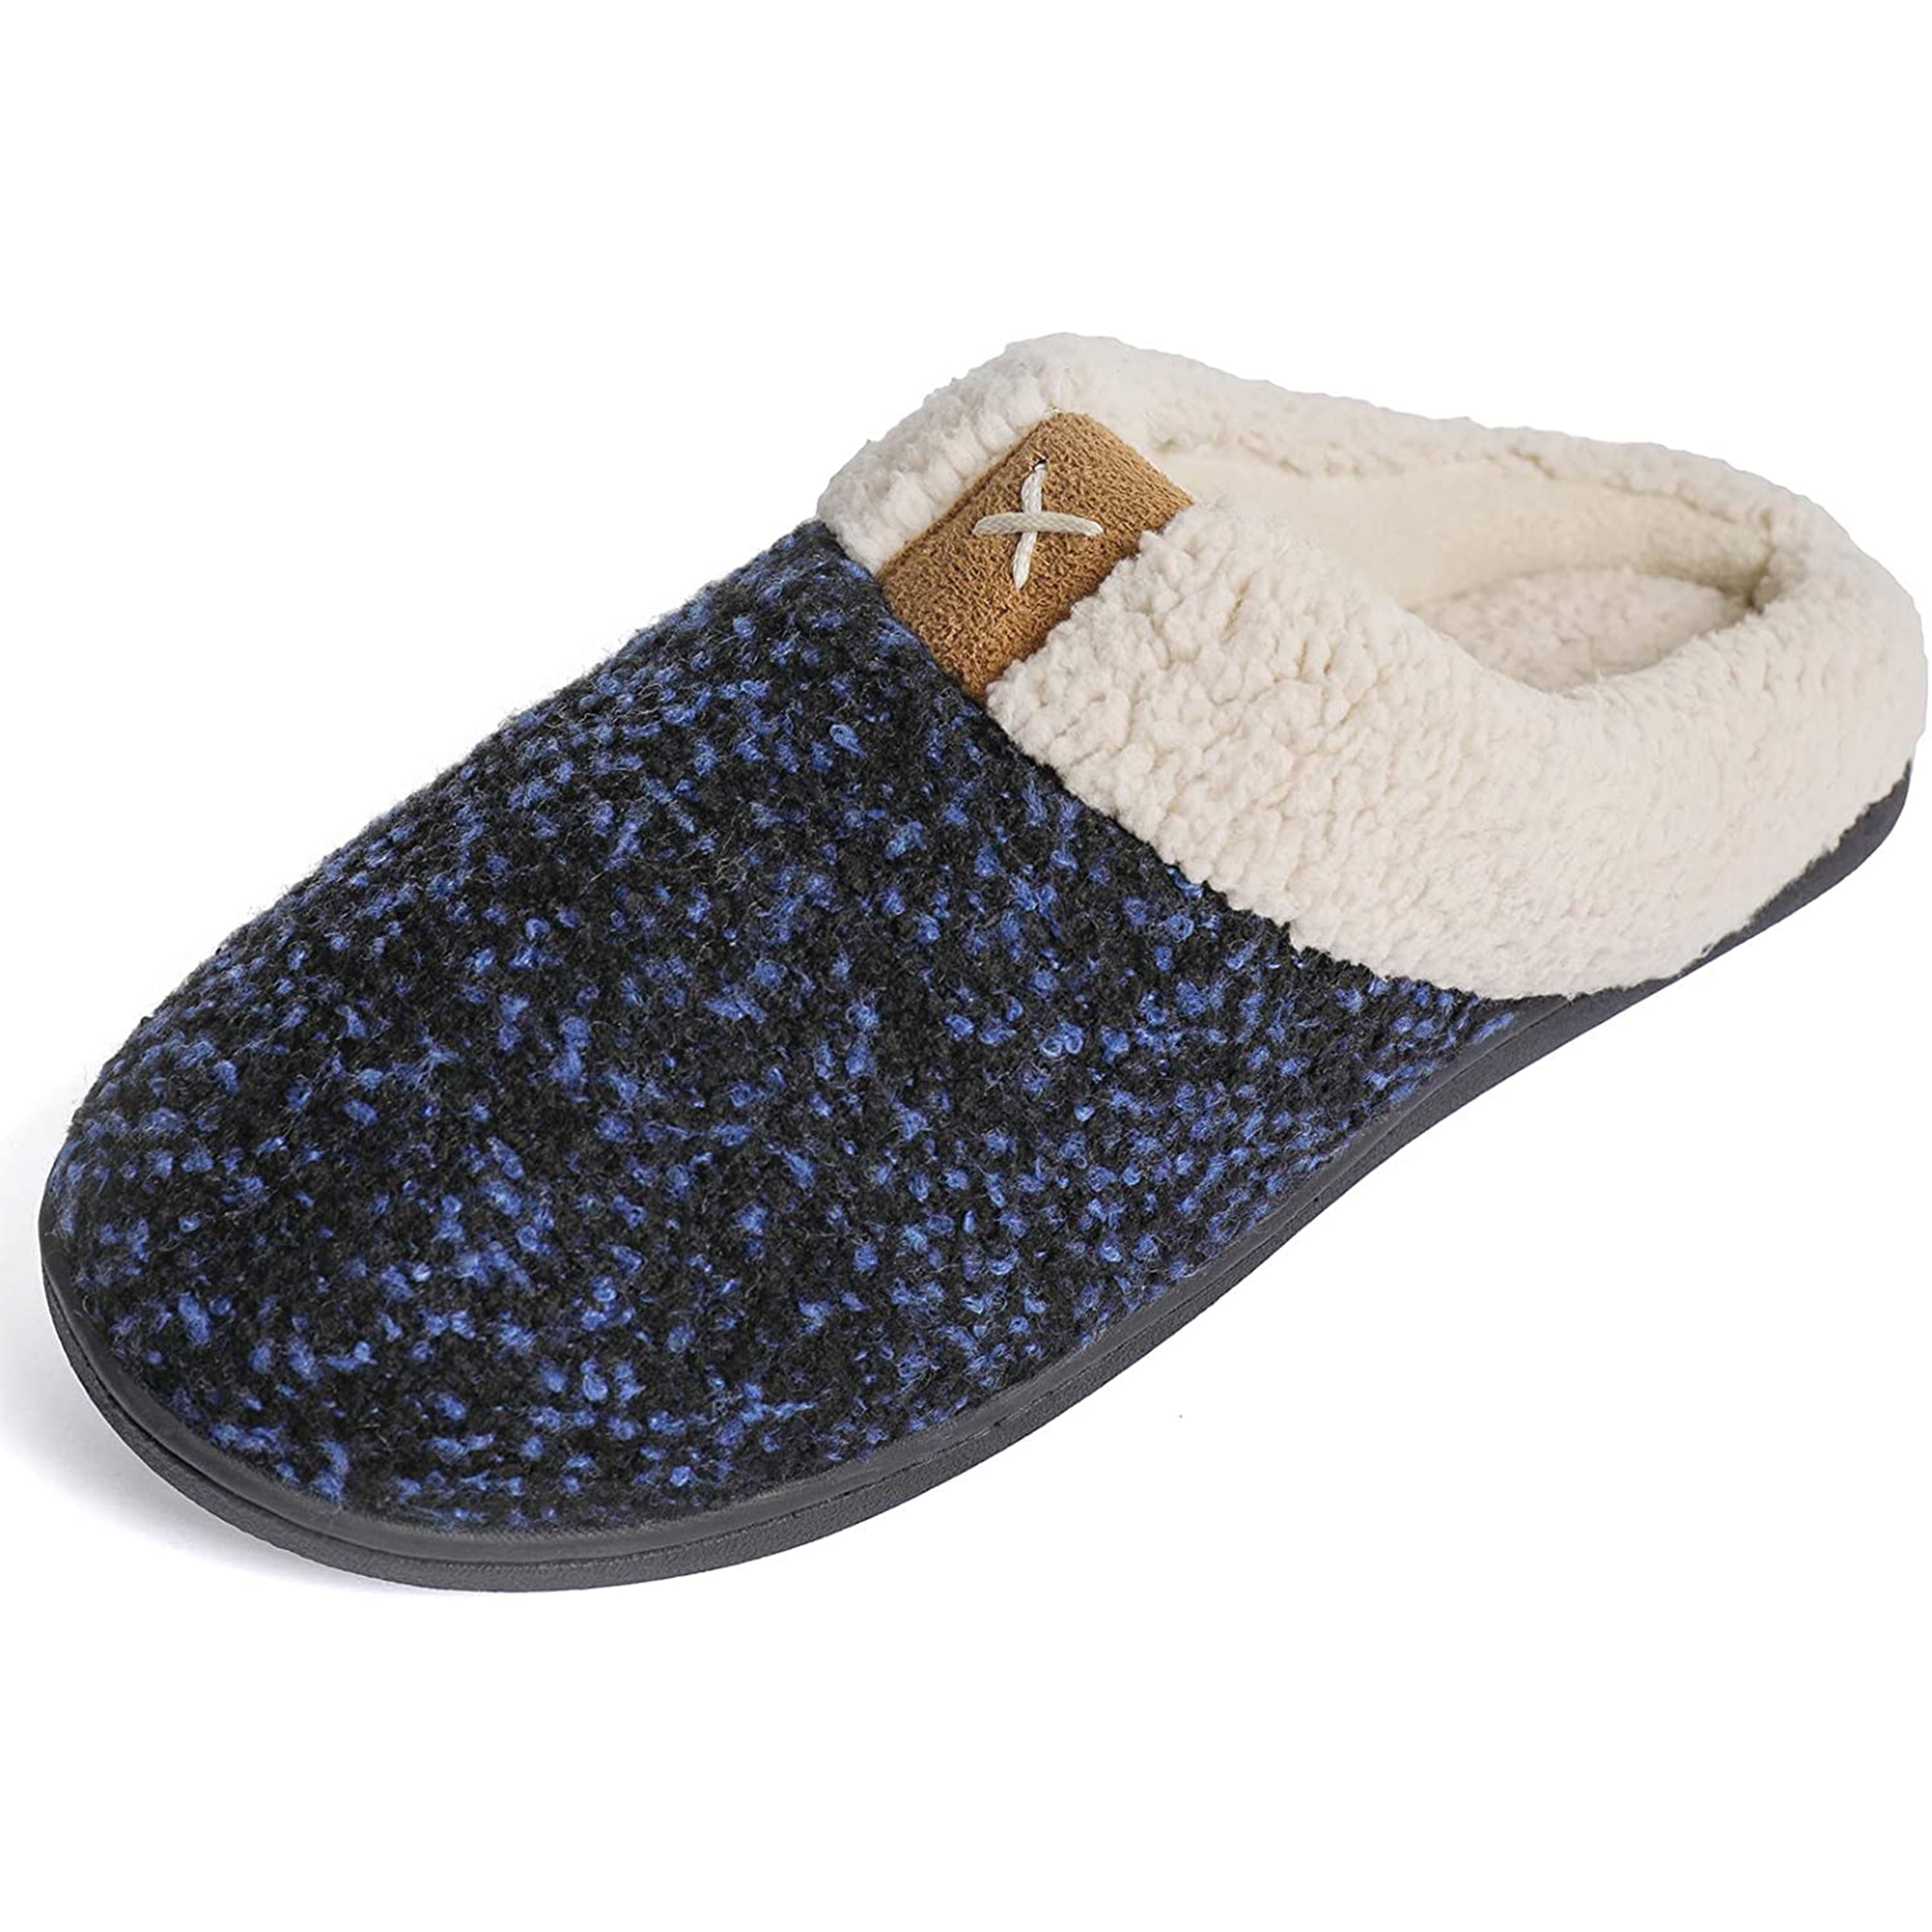 Bkolouuoe Womens Comfort Fleece Memory Foam Slippers Fuzzy Plush Lining Slip-on House Shoes for Indoor & Outdoor